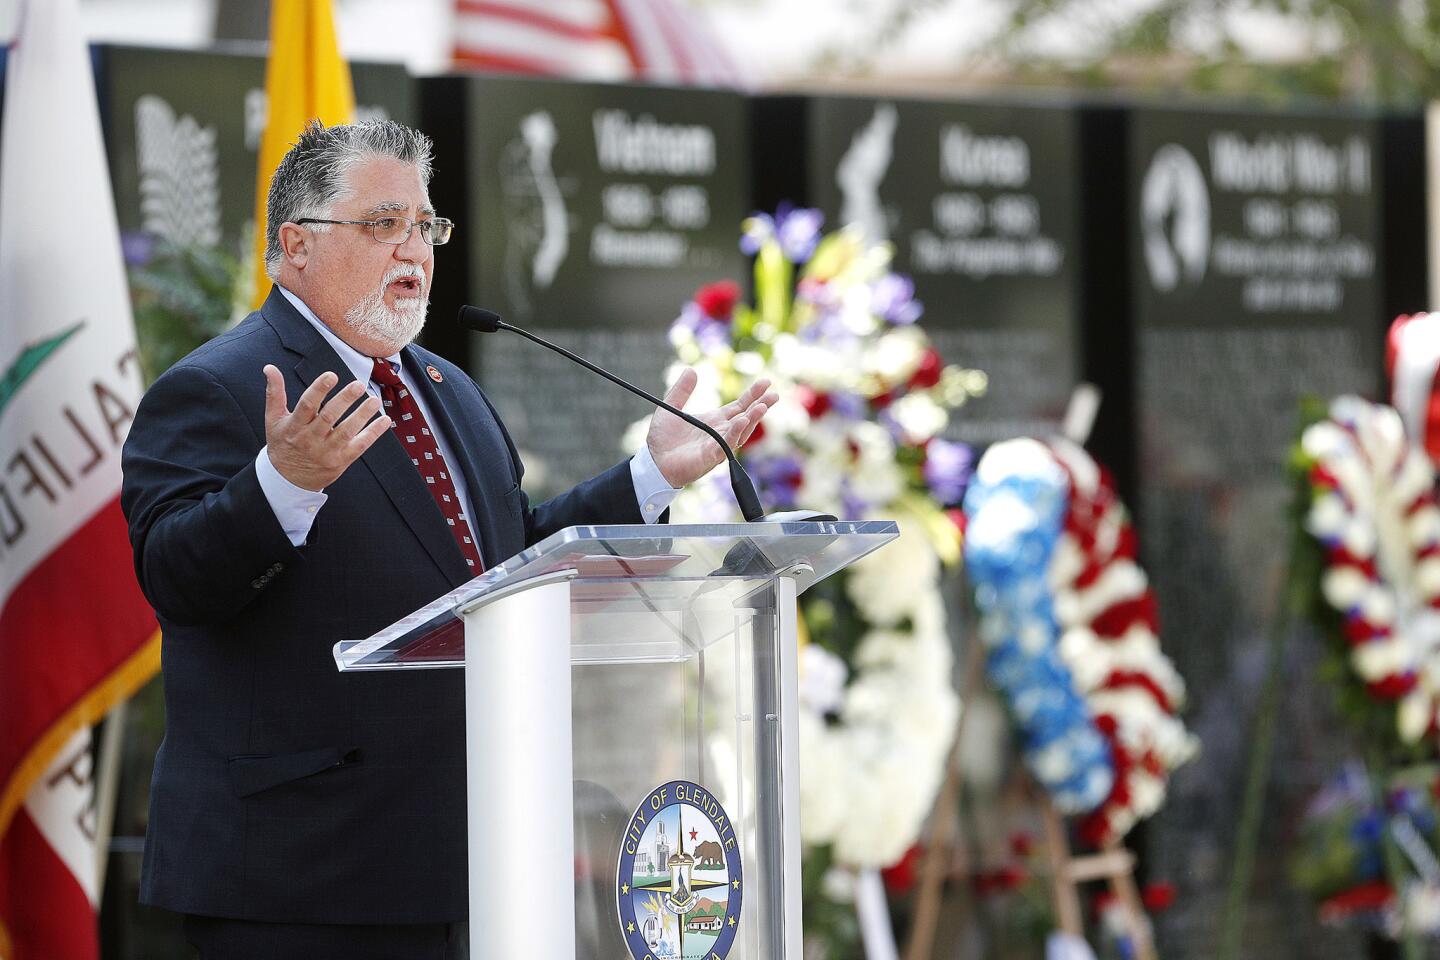 Photo Gallery: Memorial Day ceremony at Veterans Memorial in Glendale